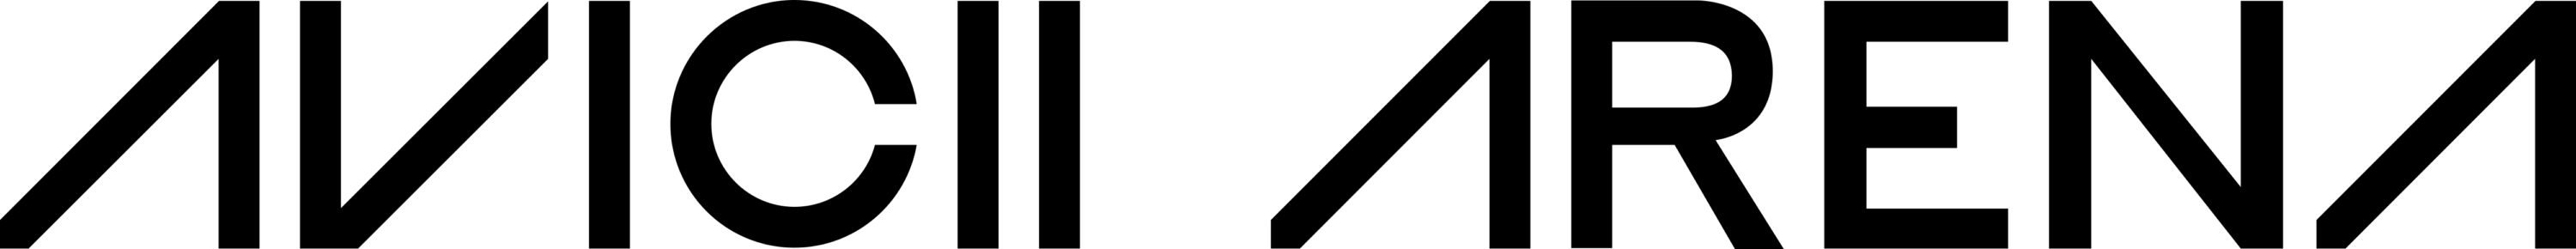 Avicii Arena Logo text full